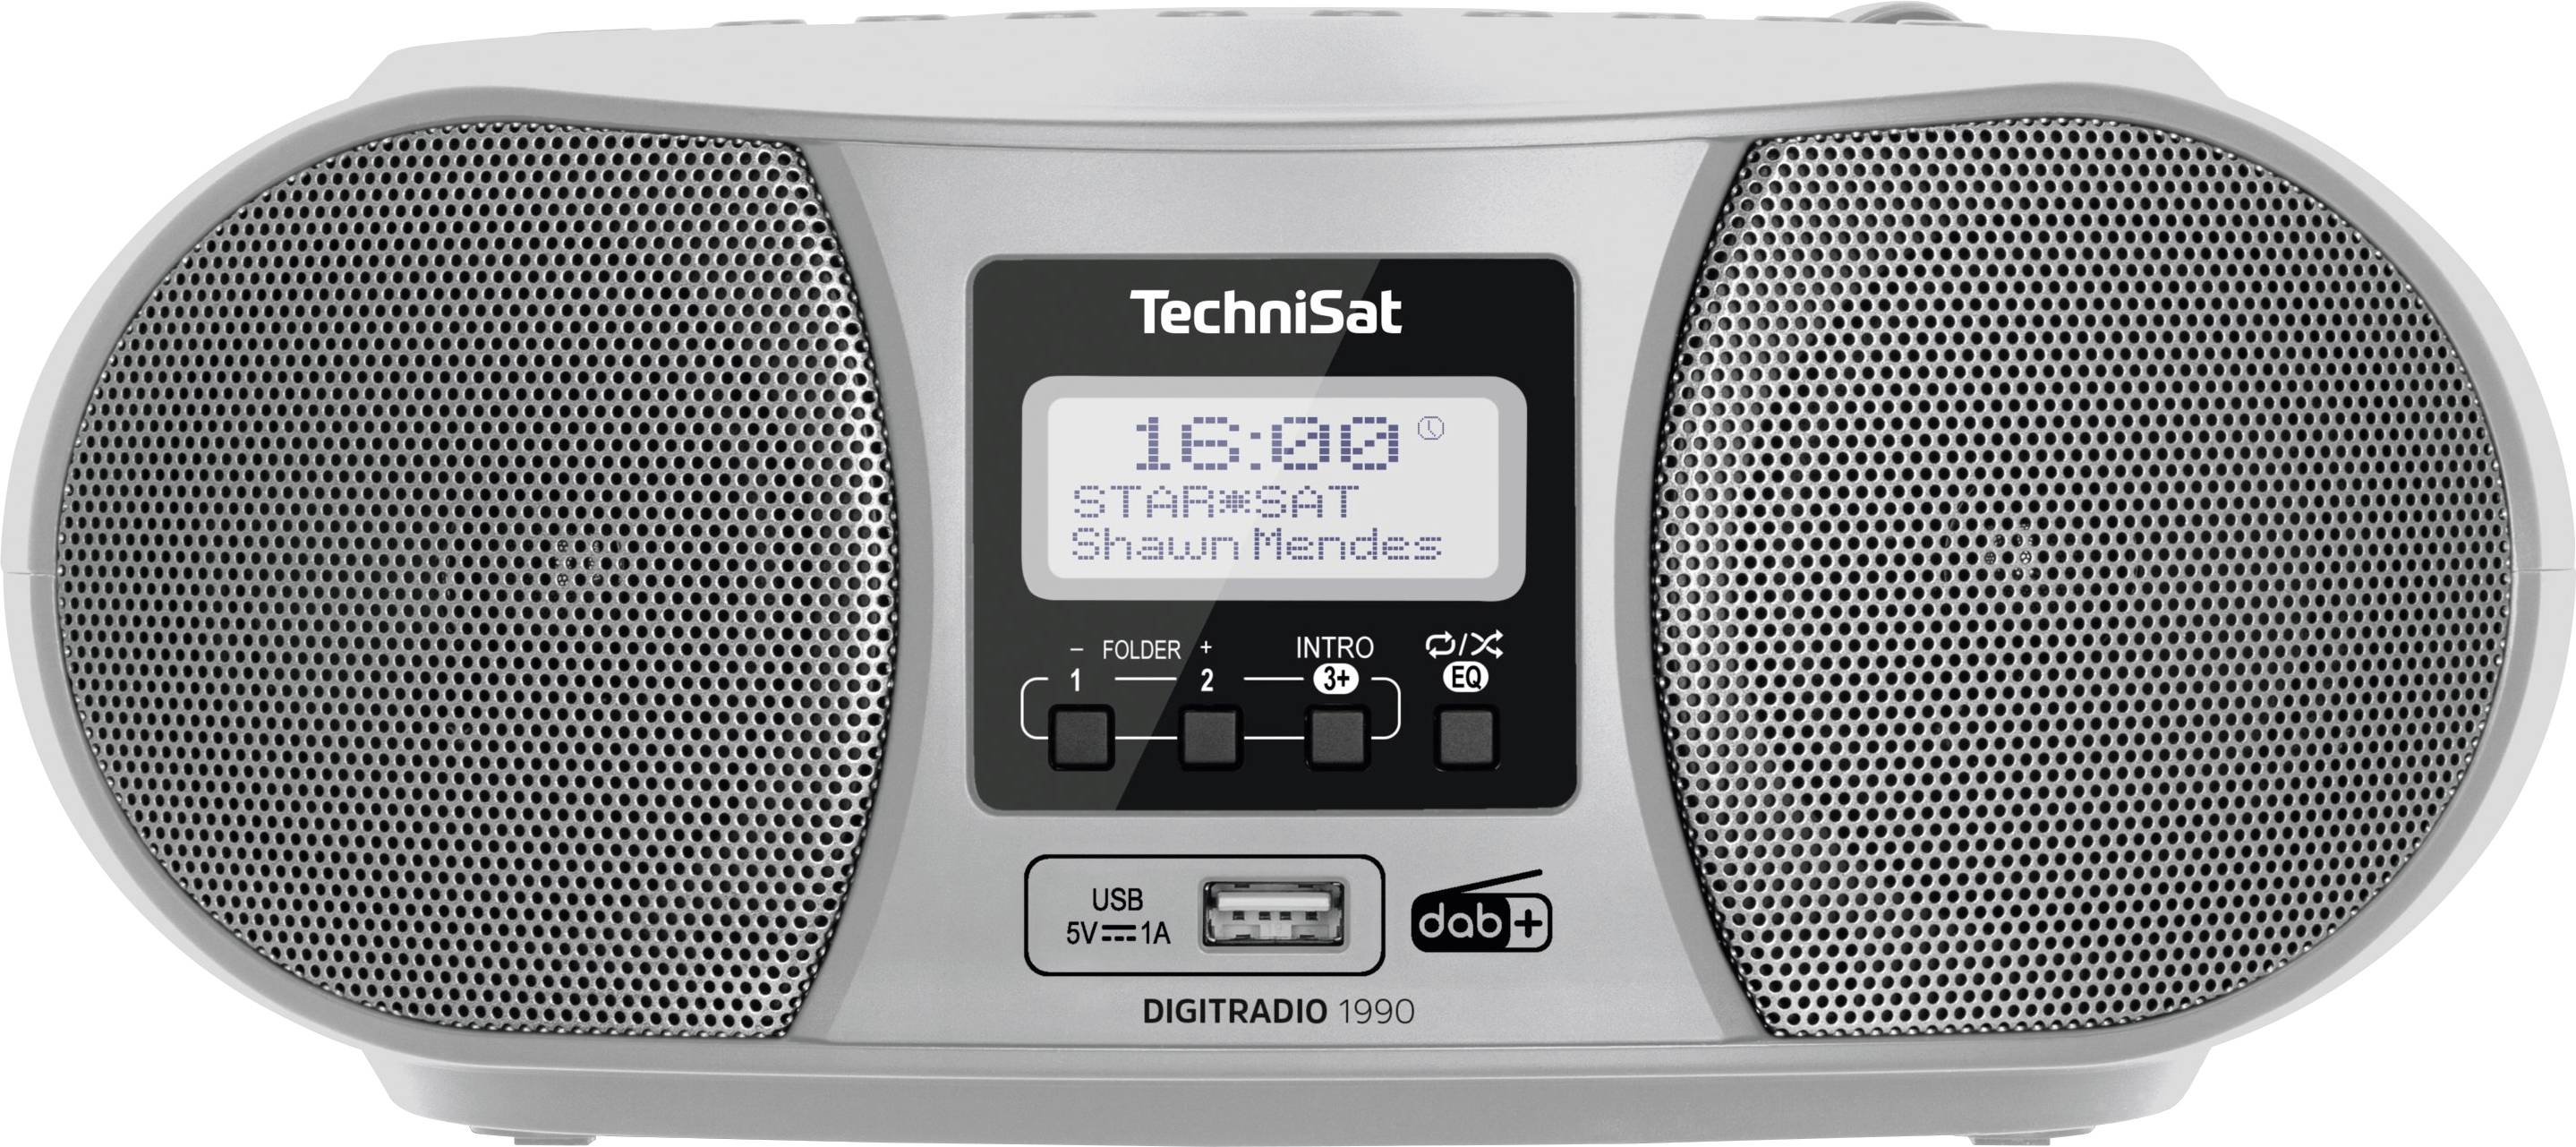 TechniSat DIGITRADIO UKW 1990 kaufen CD, USB CD-Radio DAB+, Weckfunktion Bluetooth®, Akku-Ladefunktion, Silber AUX